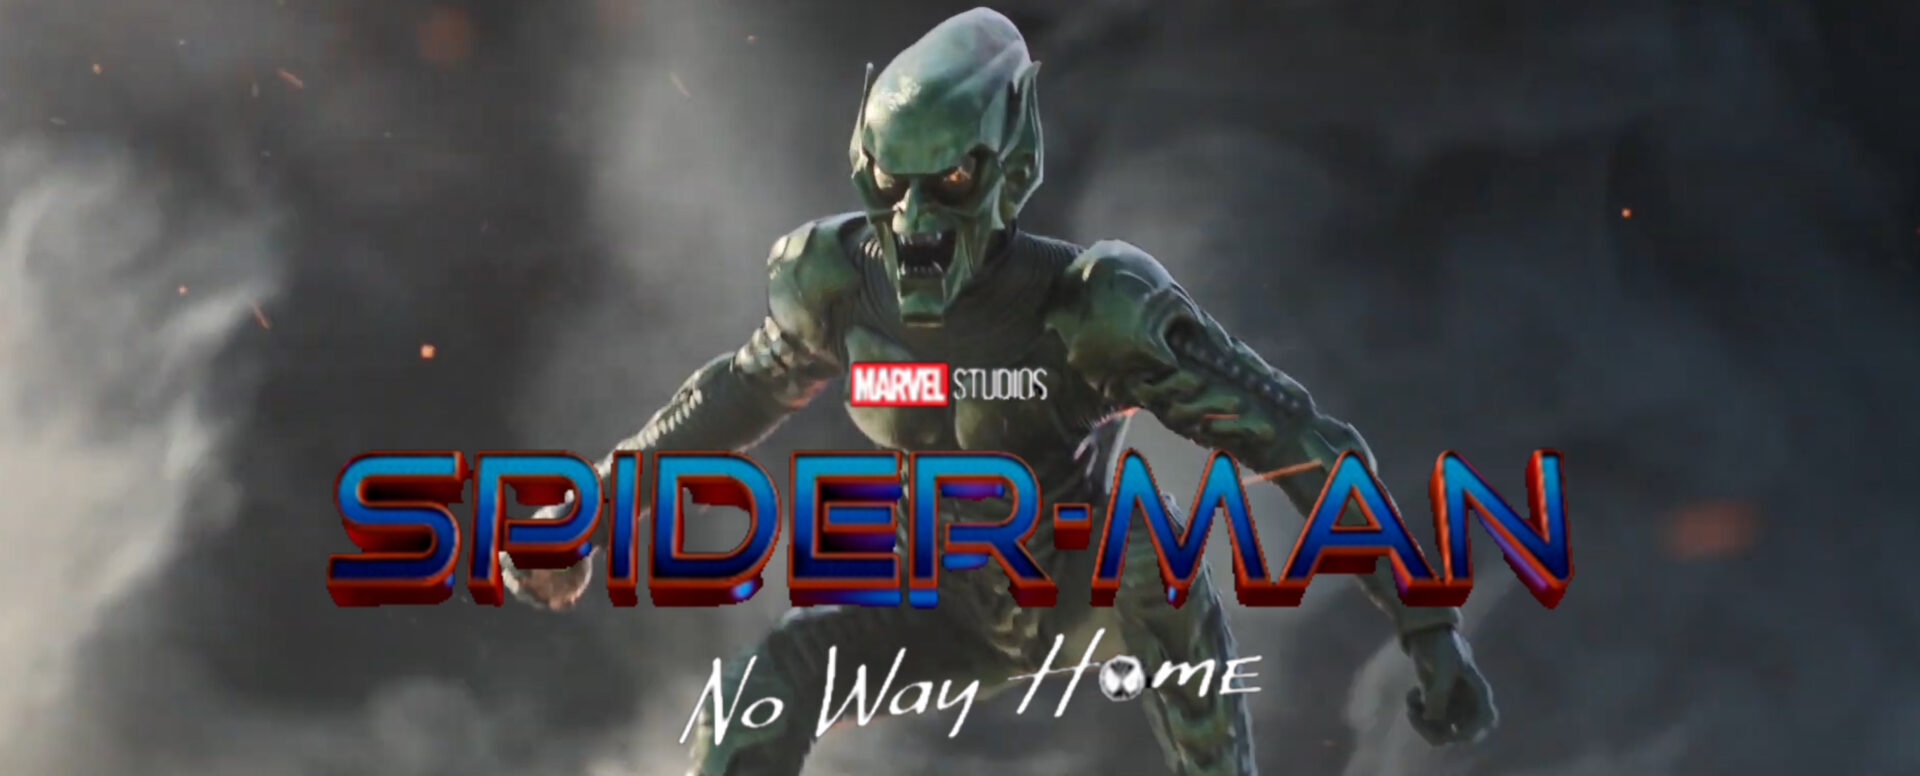 spider man nwh theatrical trailer1